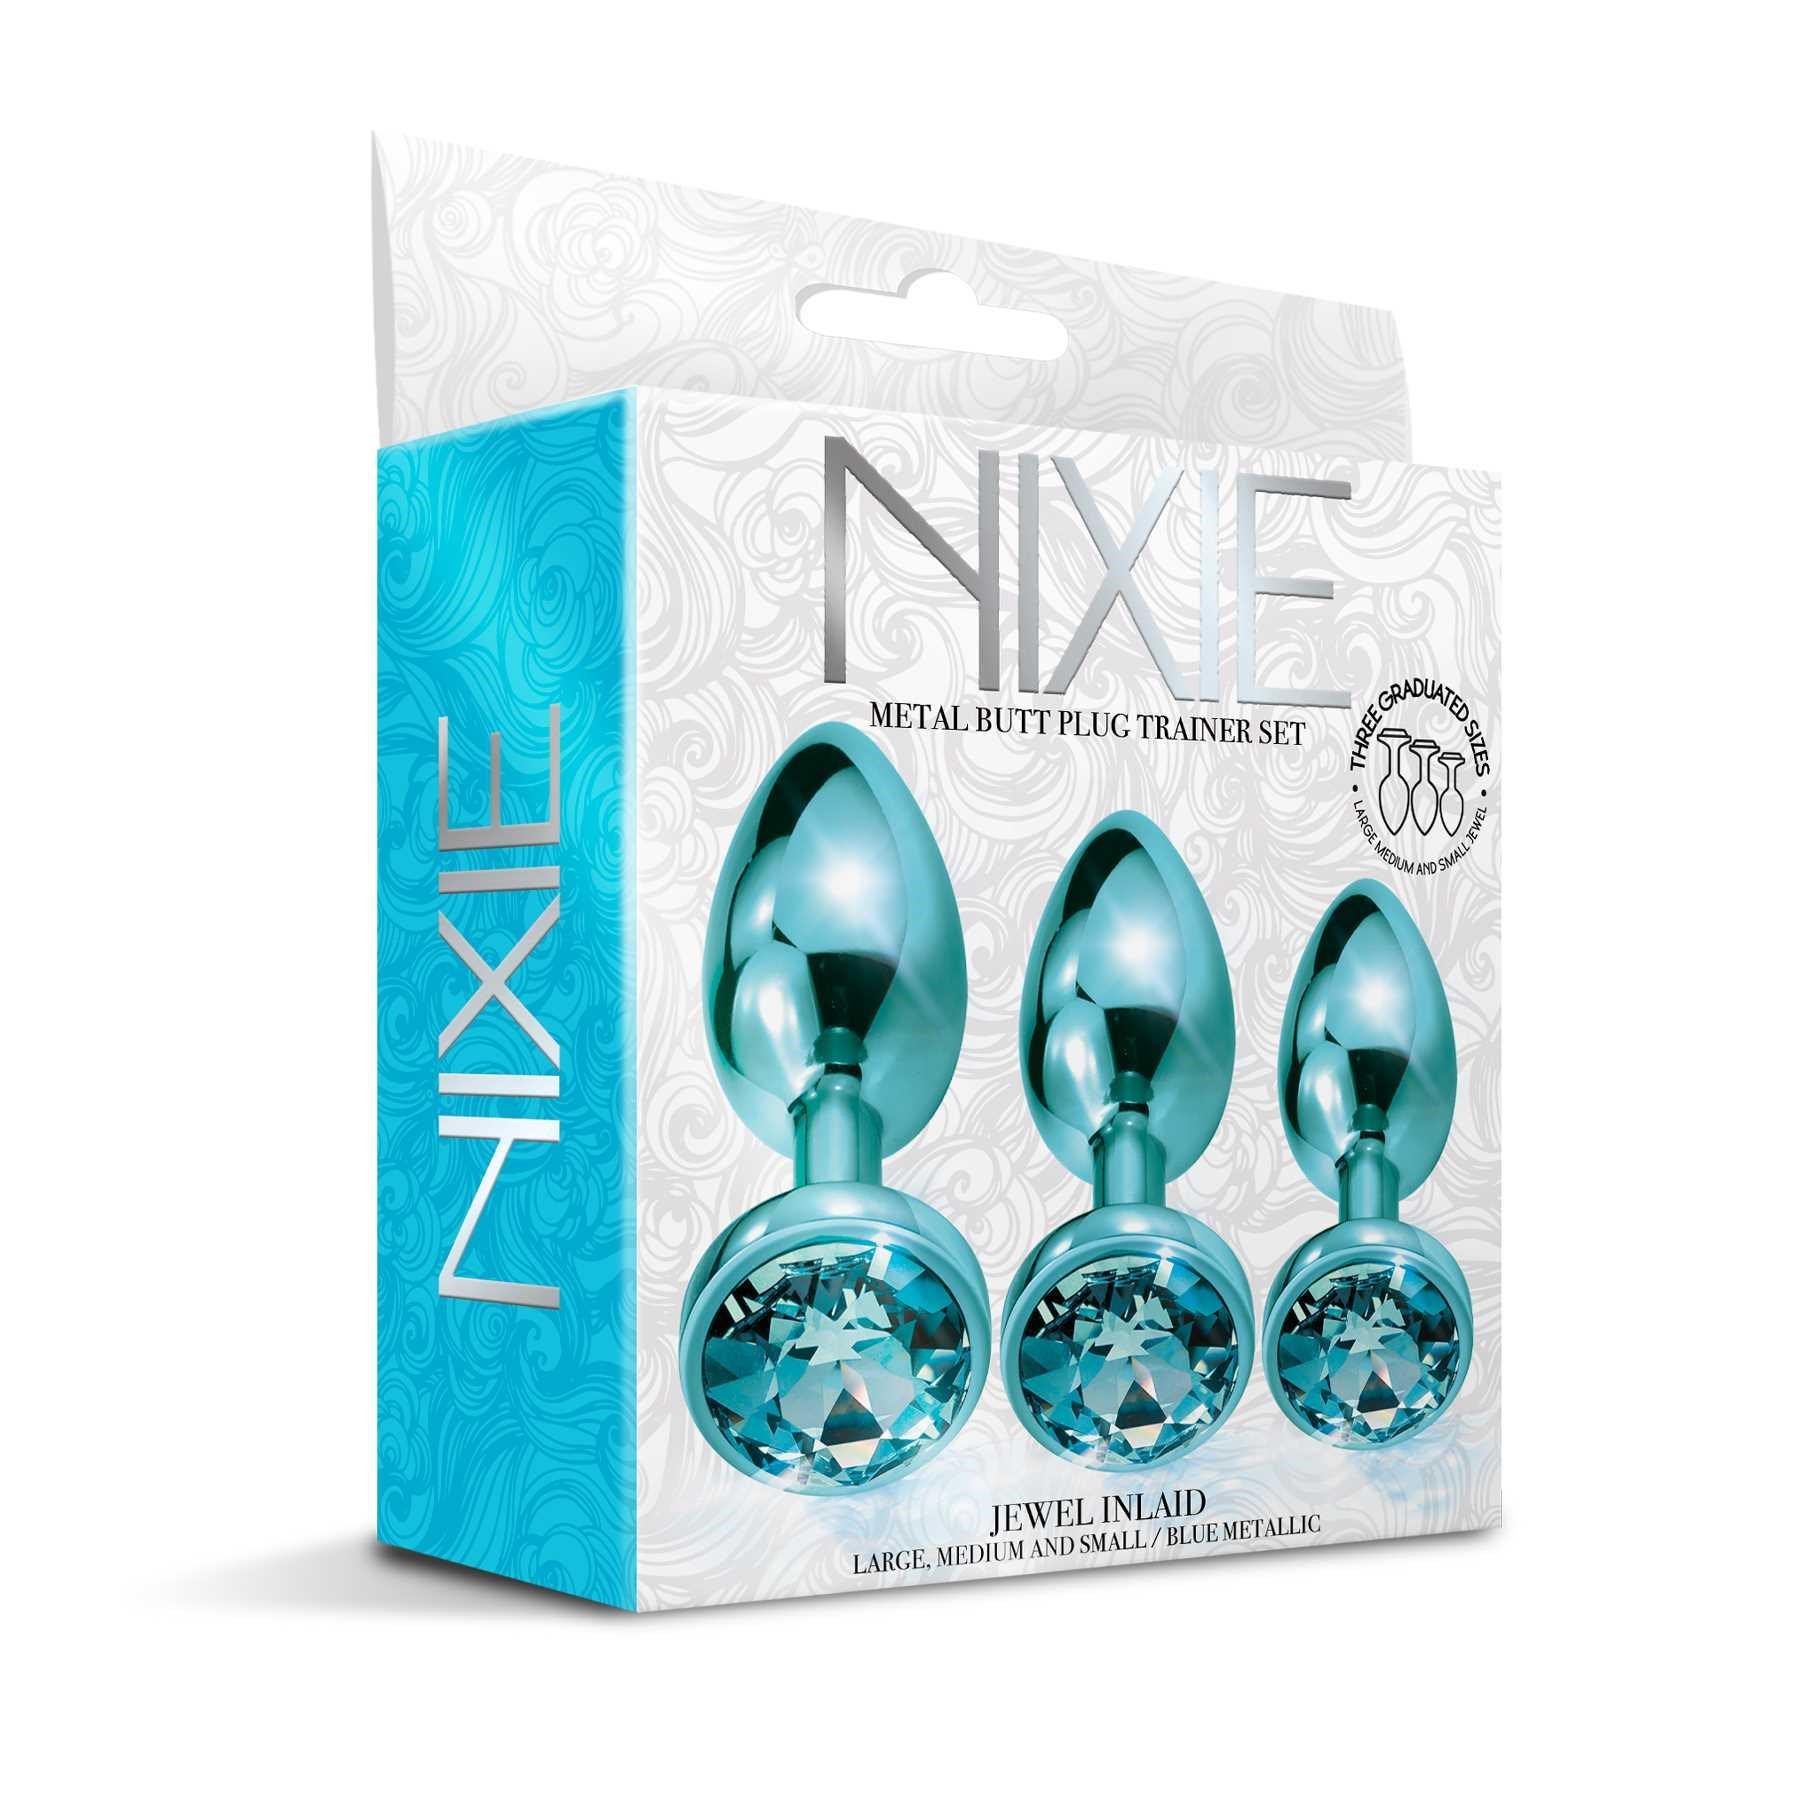 NIXIE Metal Butt Plug Trainer Set Metallic packaging